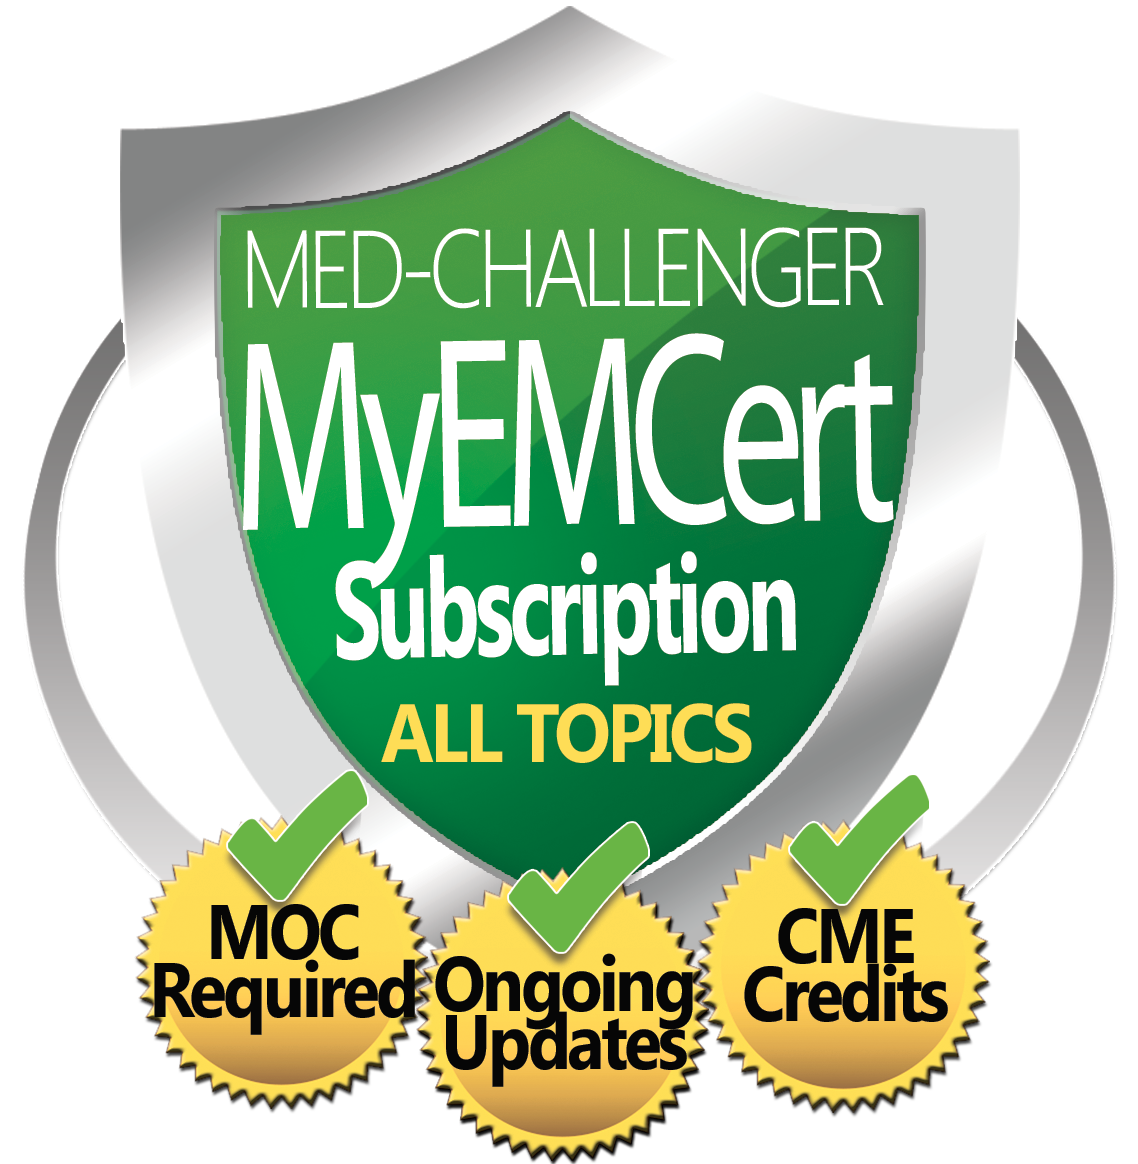 subcription_icon_myemcert_subscription_all_topics-1